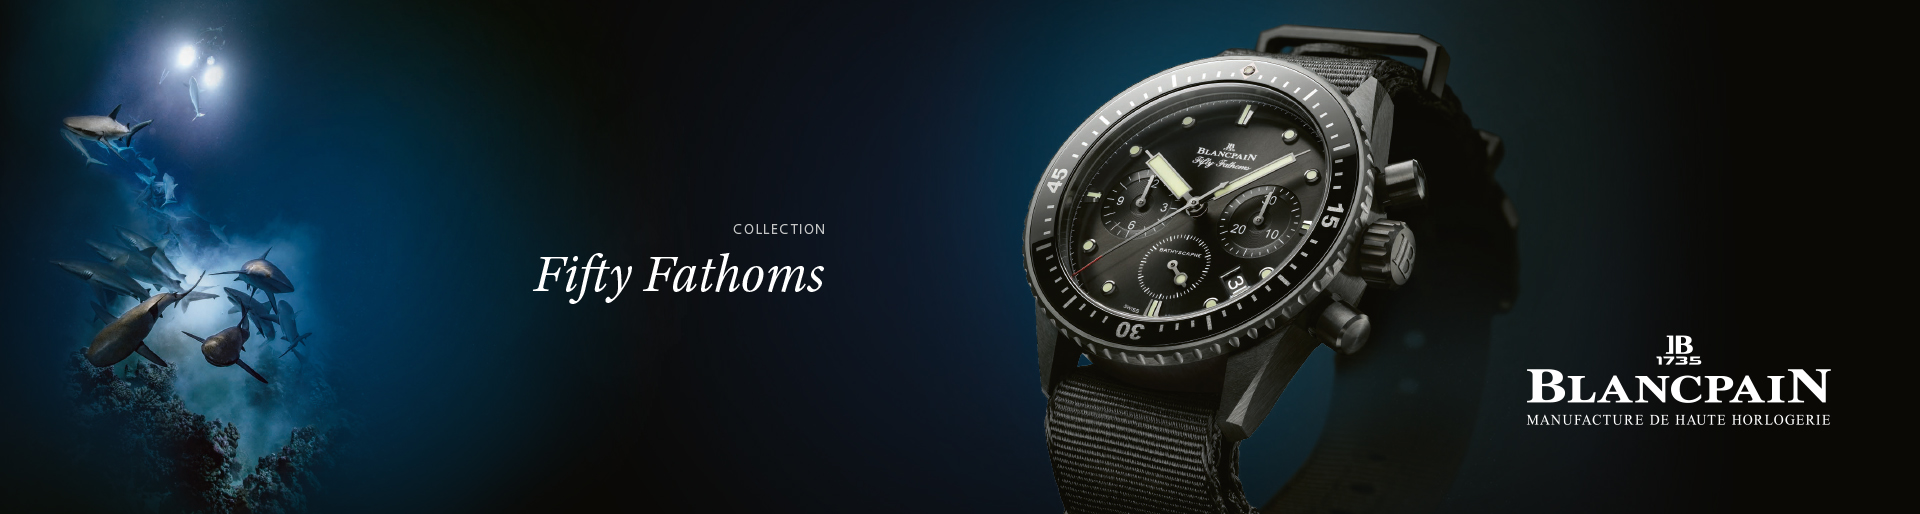 Fifty Fathoms Blancpain - Emperor Watch & Jewellery Ltd